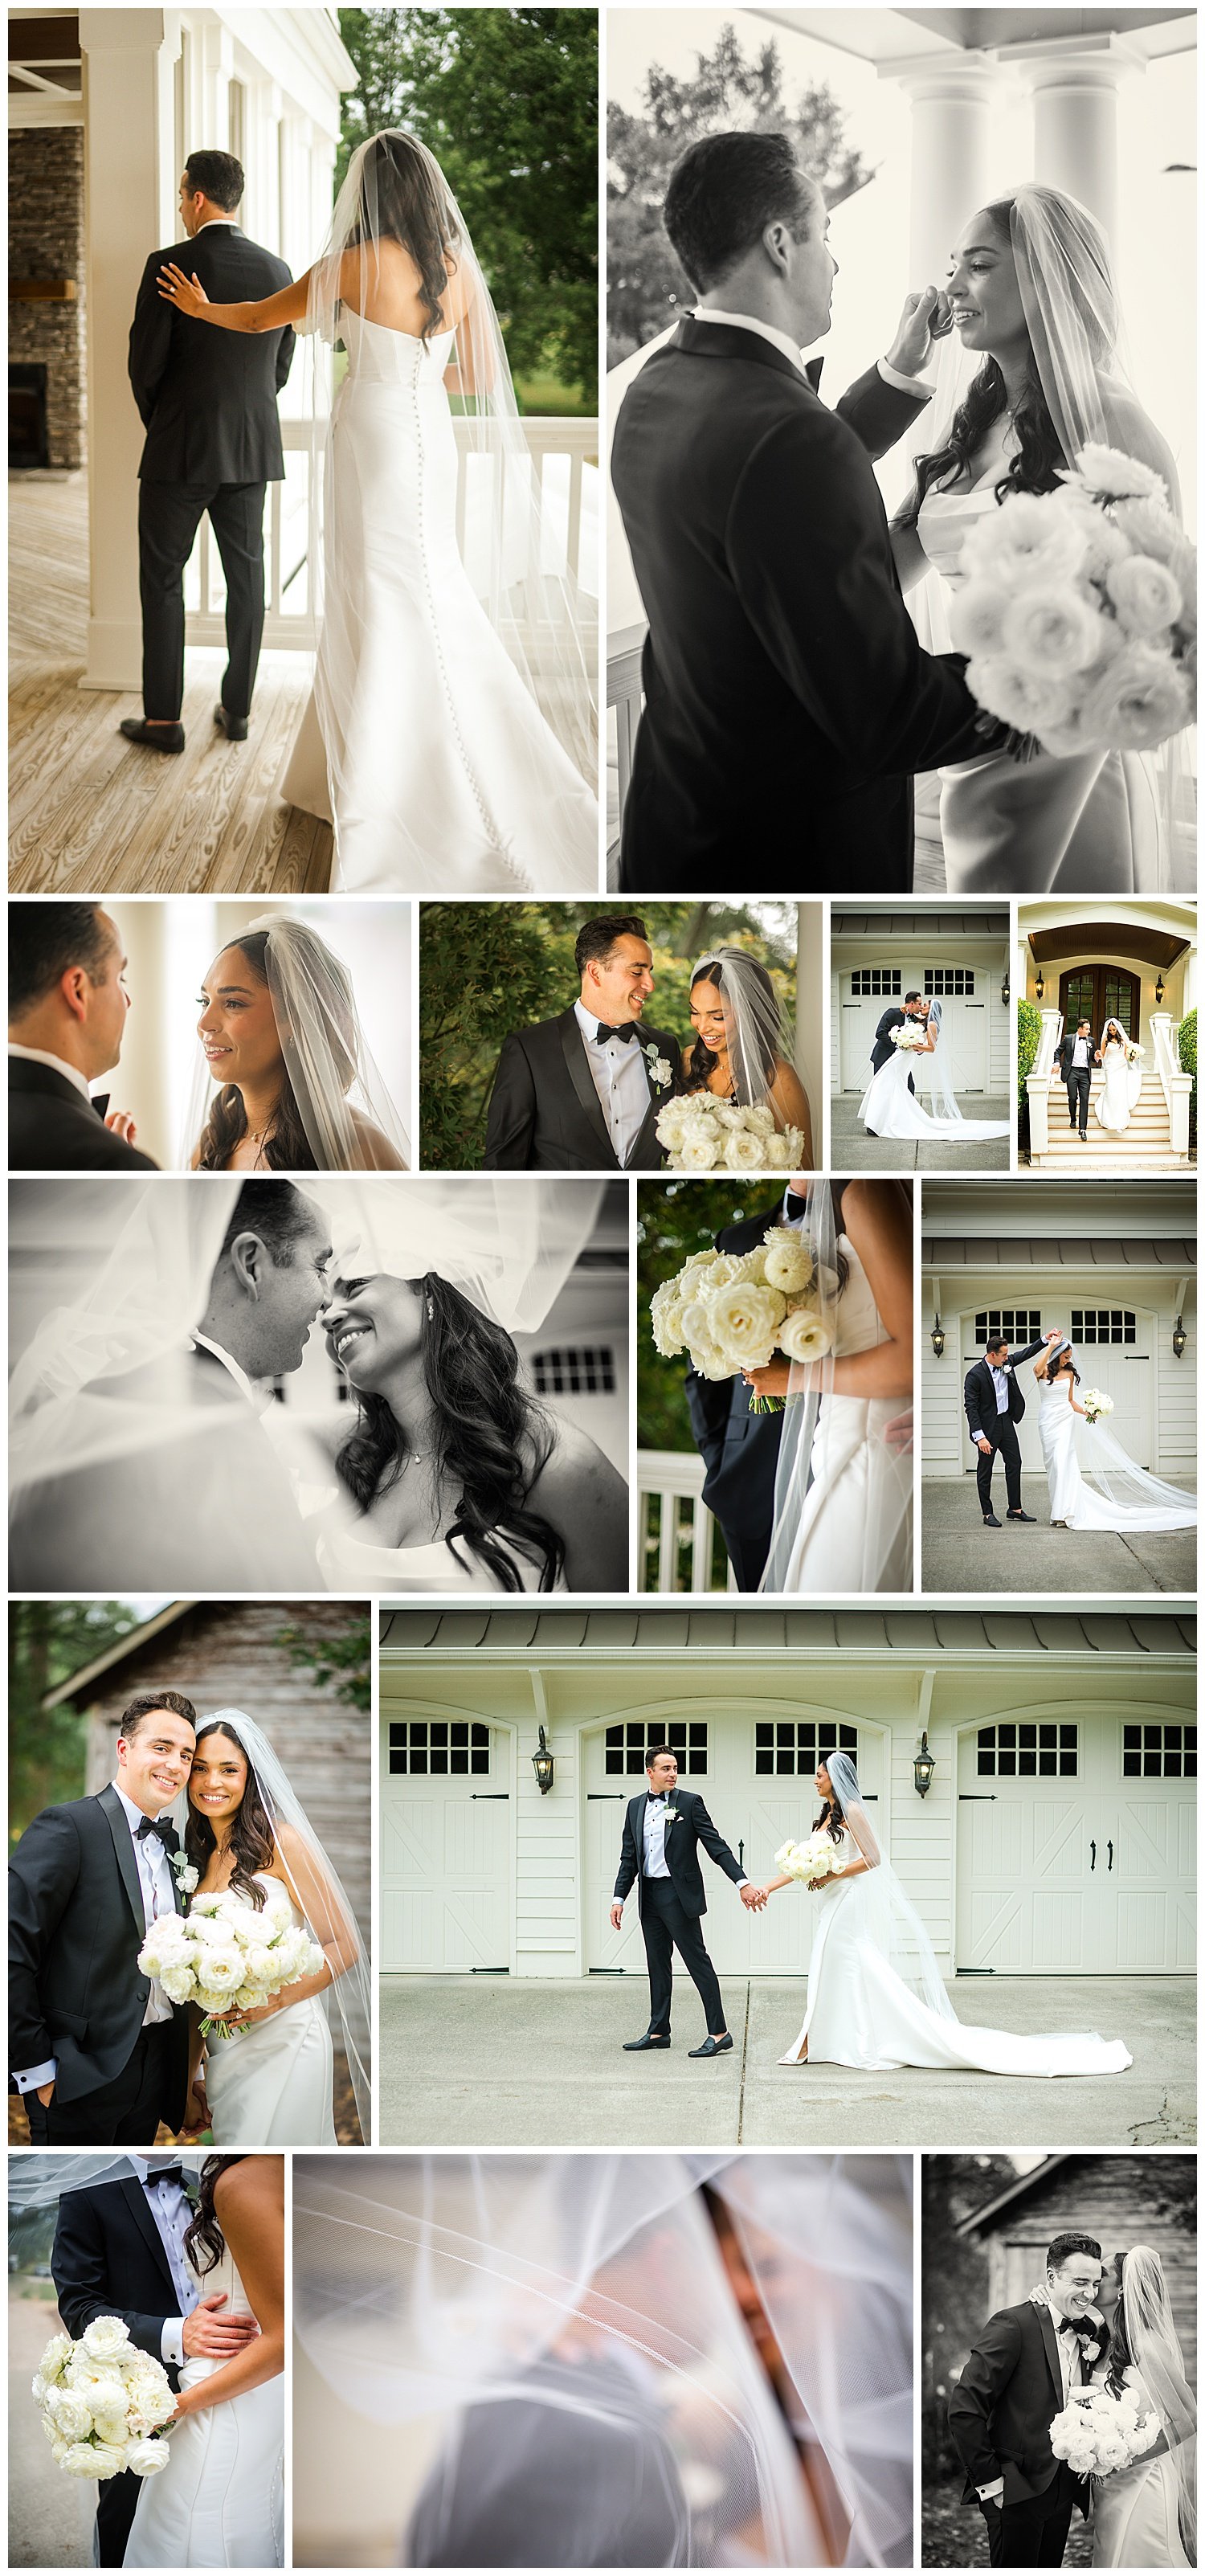 Sydney Dreher and Jason McKee's Wedding Website - The Knot